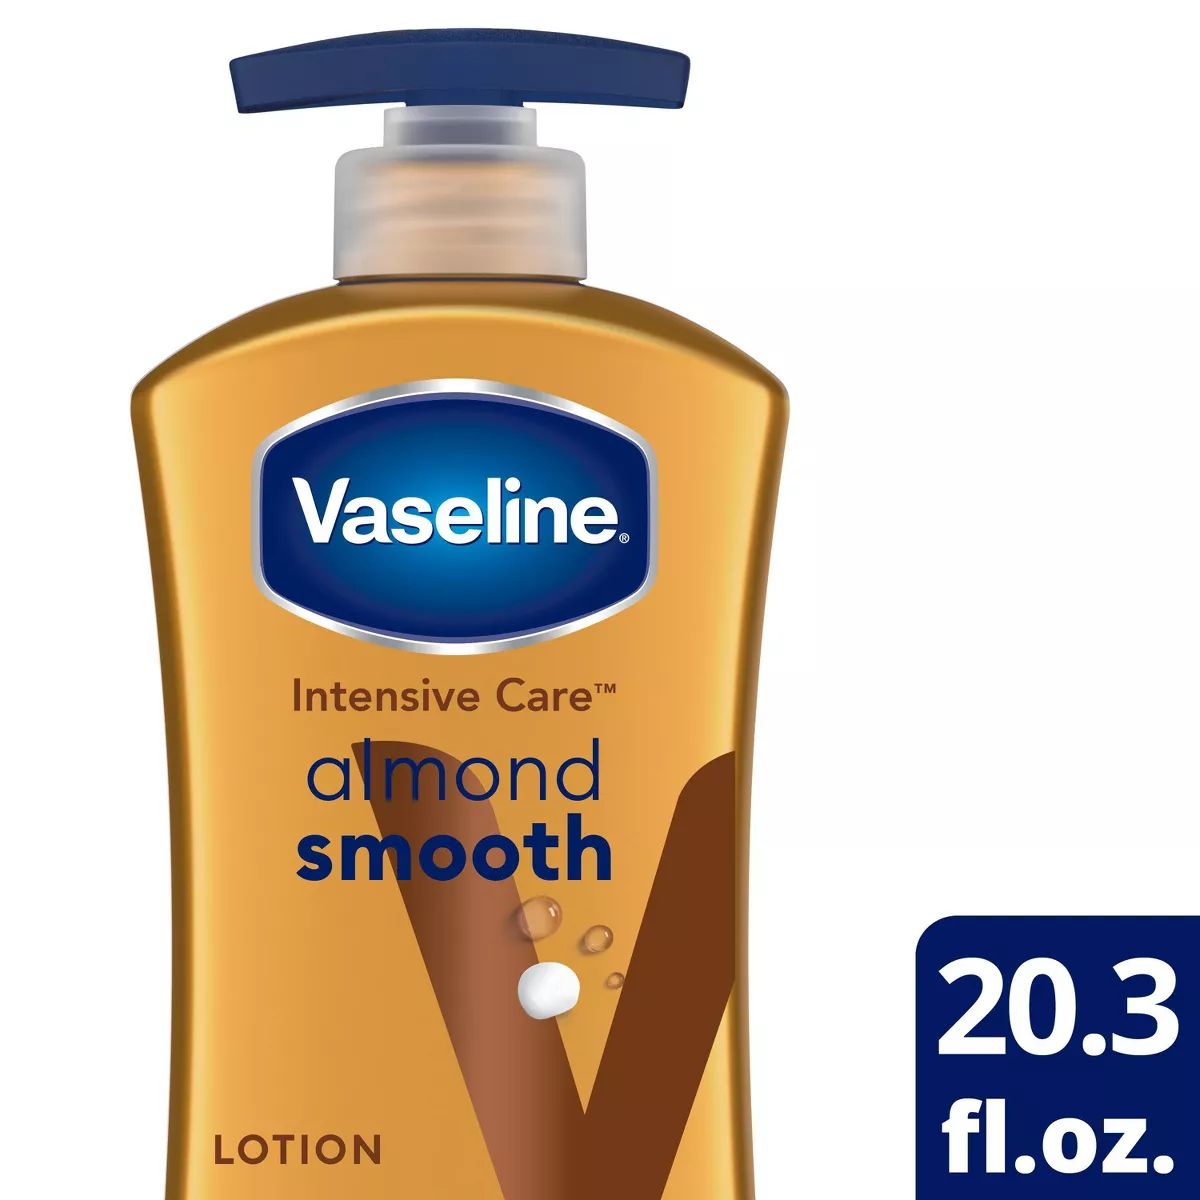 Vaseline Almond Smooth Lotion - 1ct/20.3 fl oz | Target